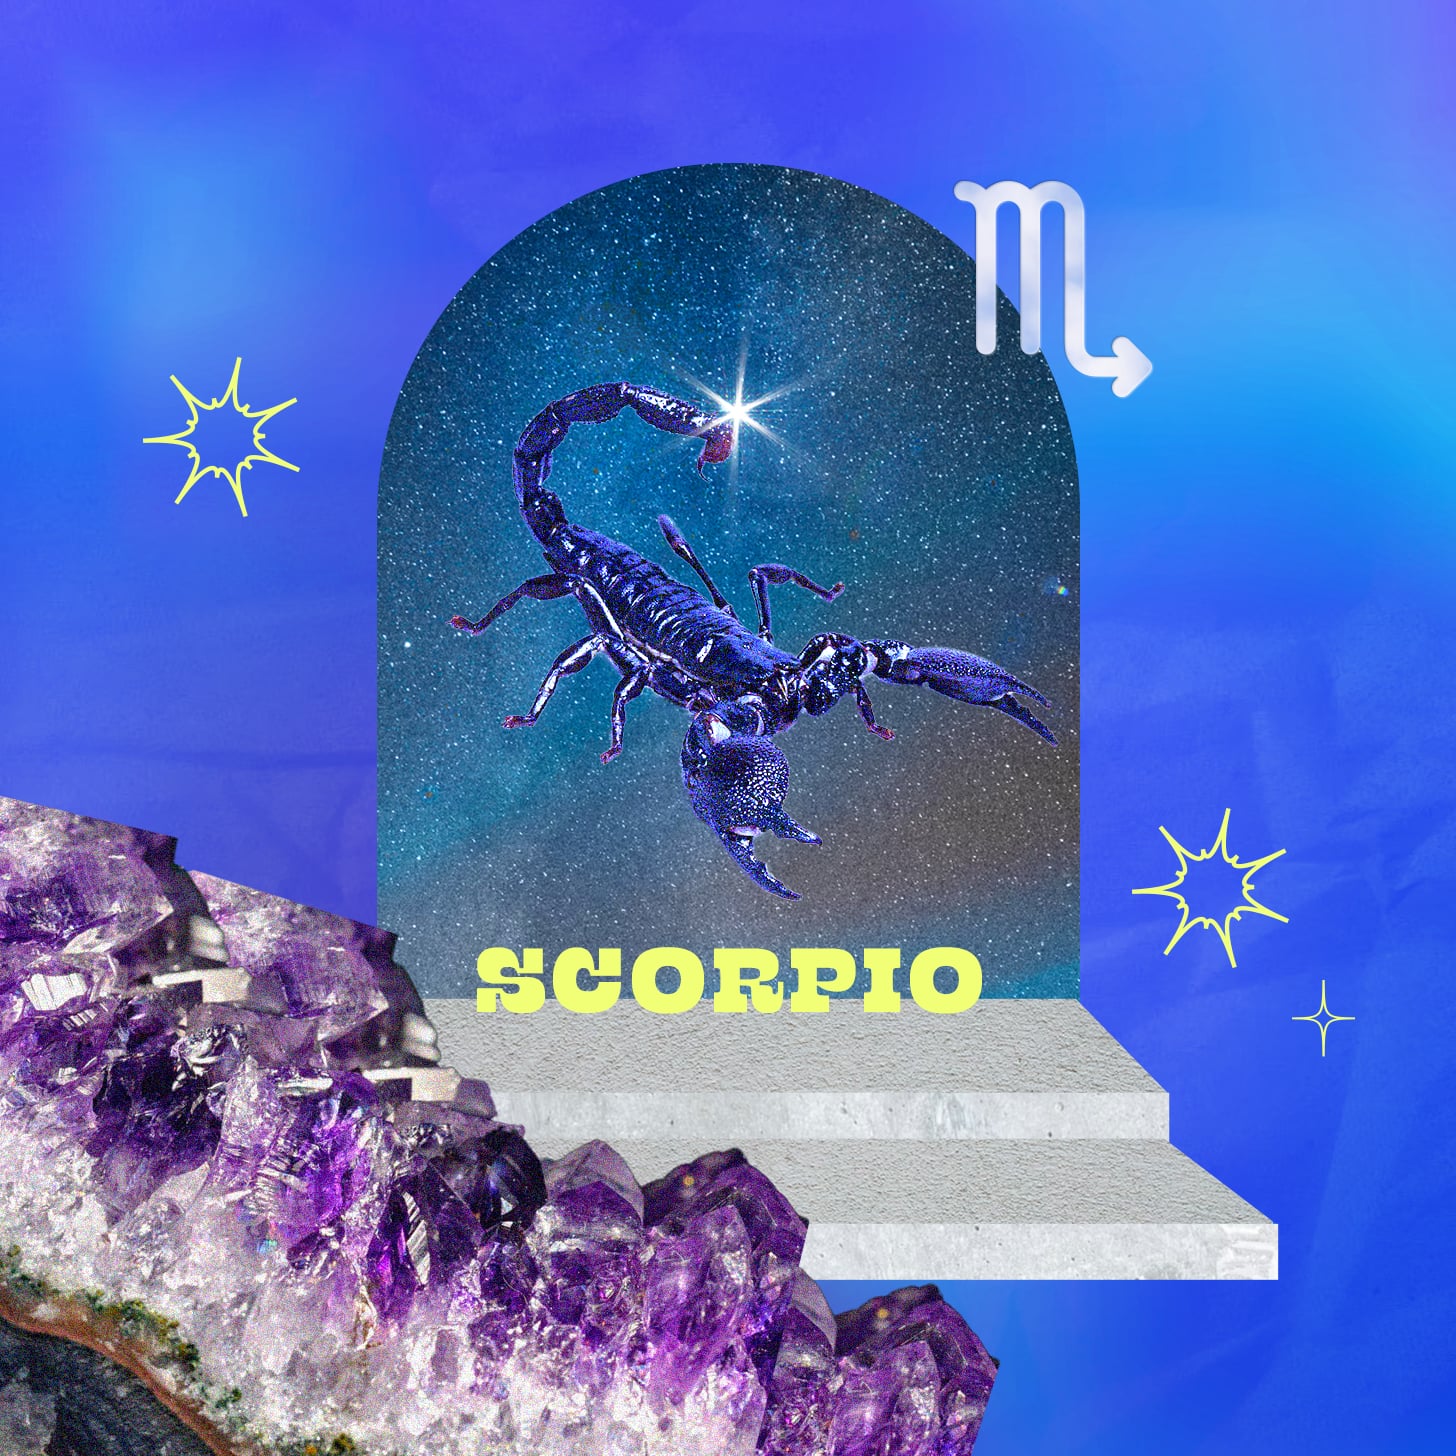 Scorpio weekly horoscope for July 10, 2022